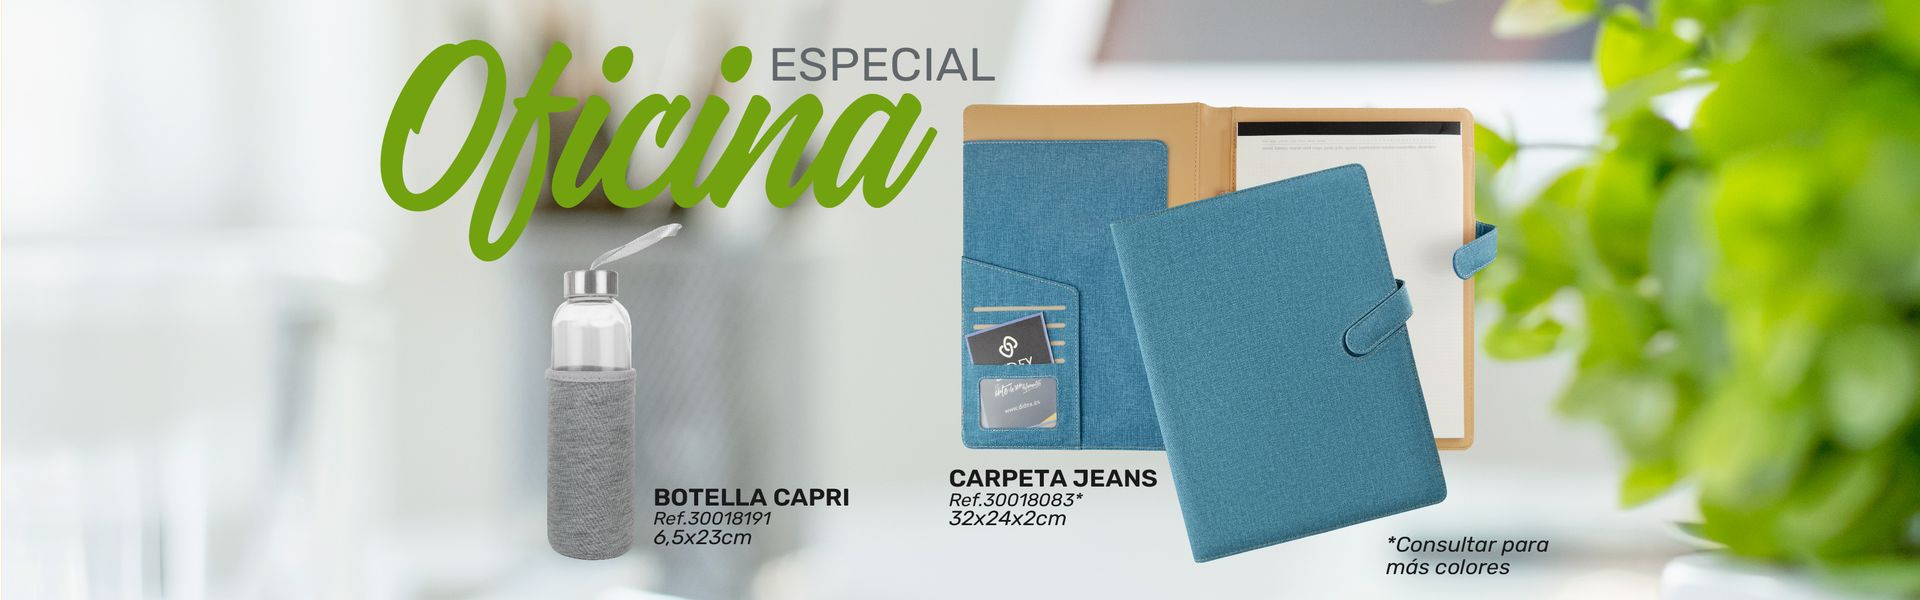 Carpeta Jeans y Botella Capri